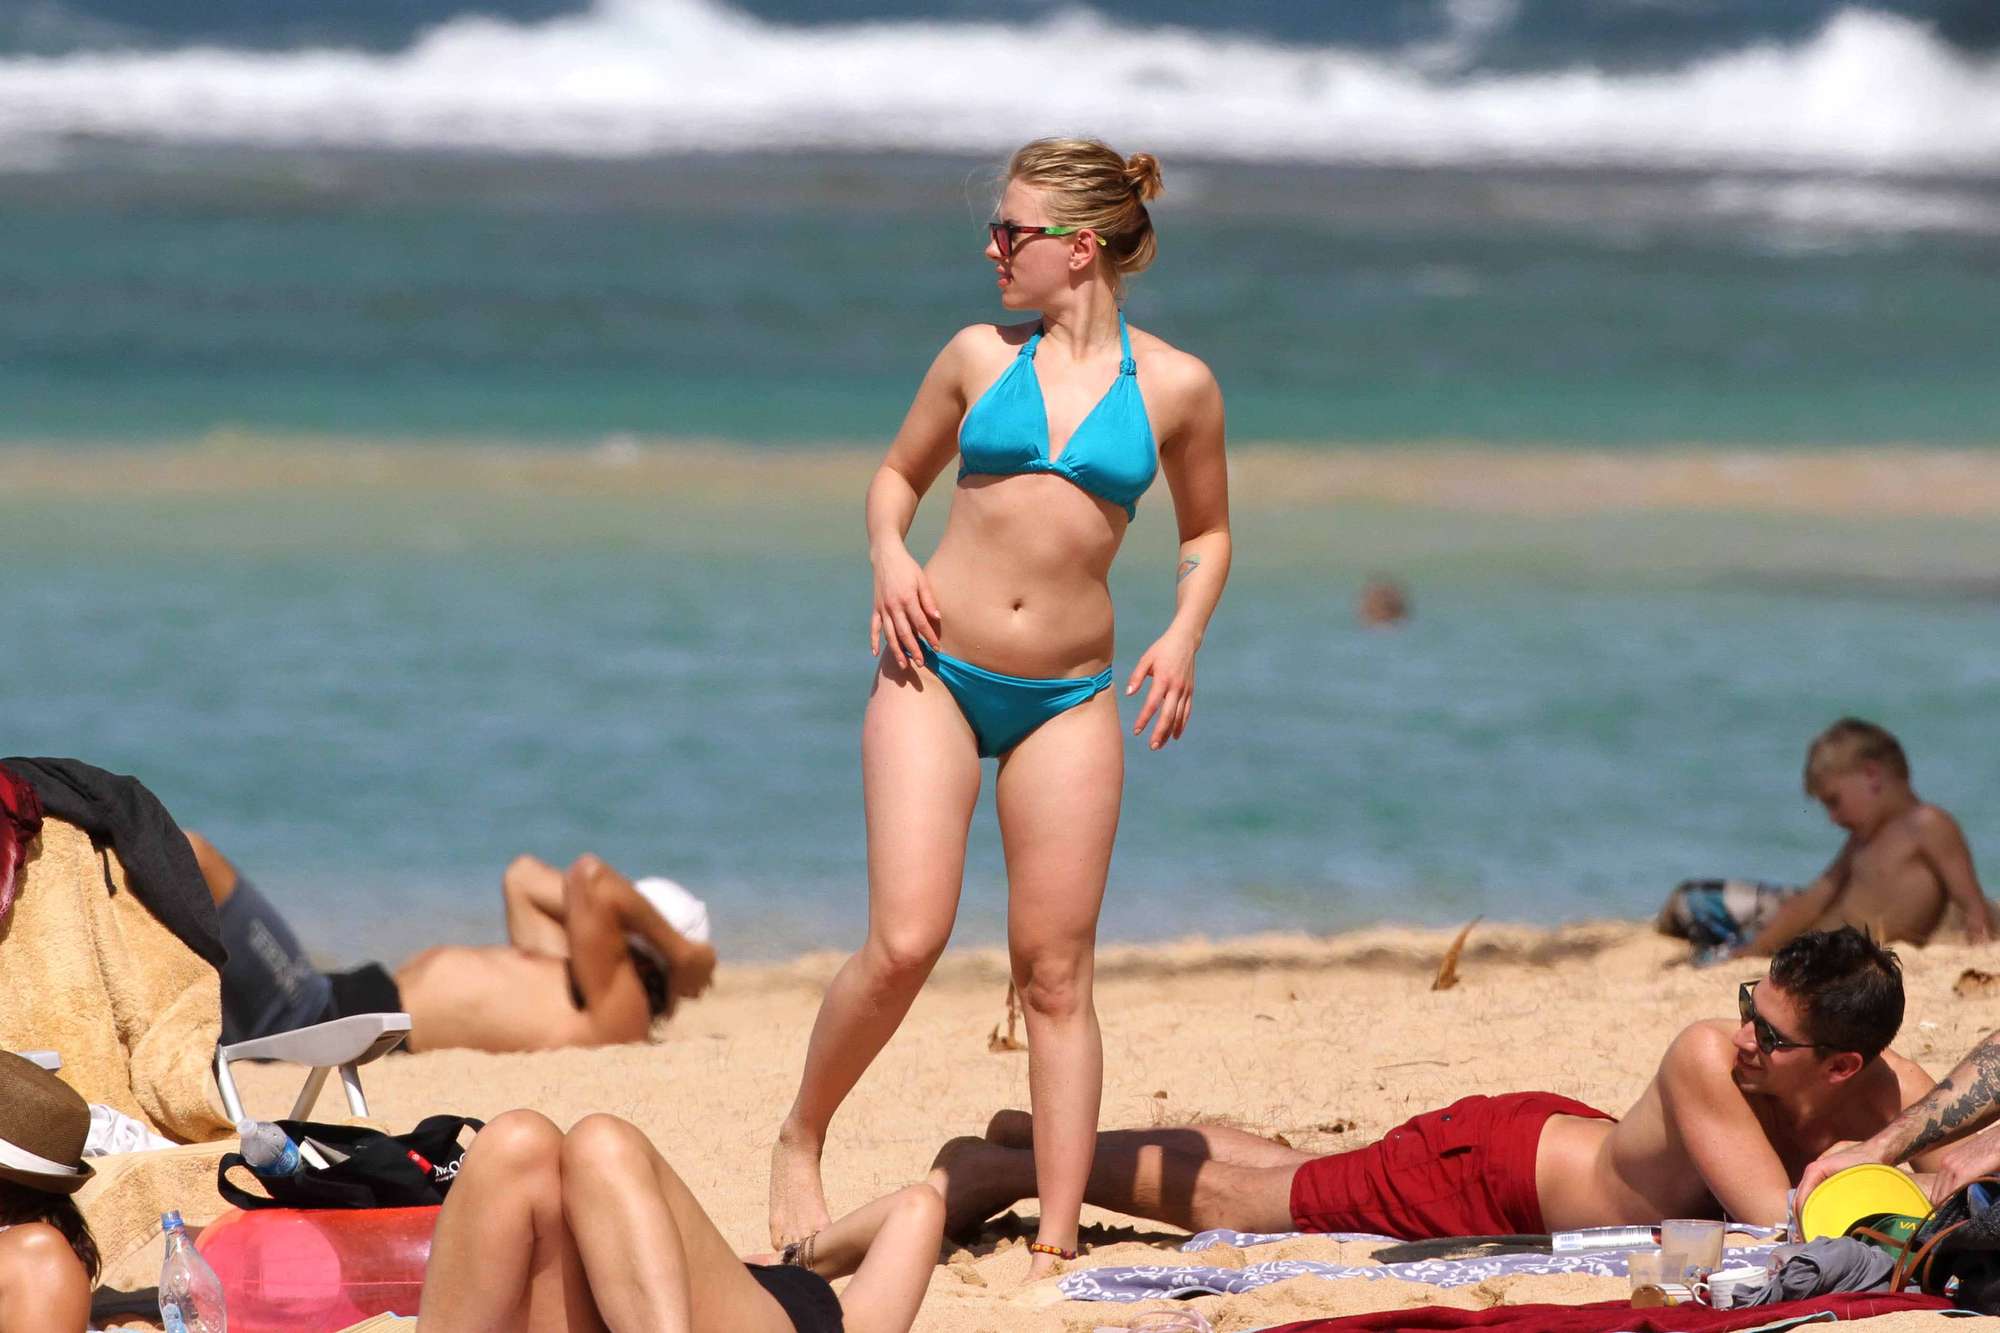 Scarlet Johansson 2012 : Scarlett Johansson Bikini pics from Hawaii 2012-27...